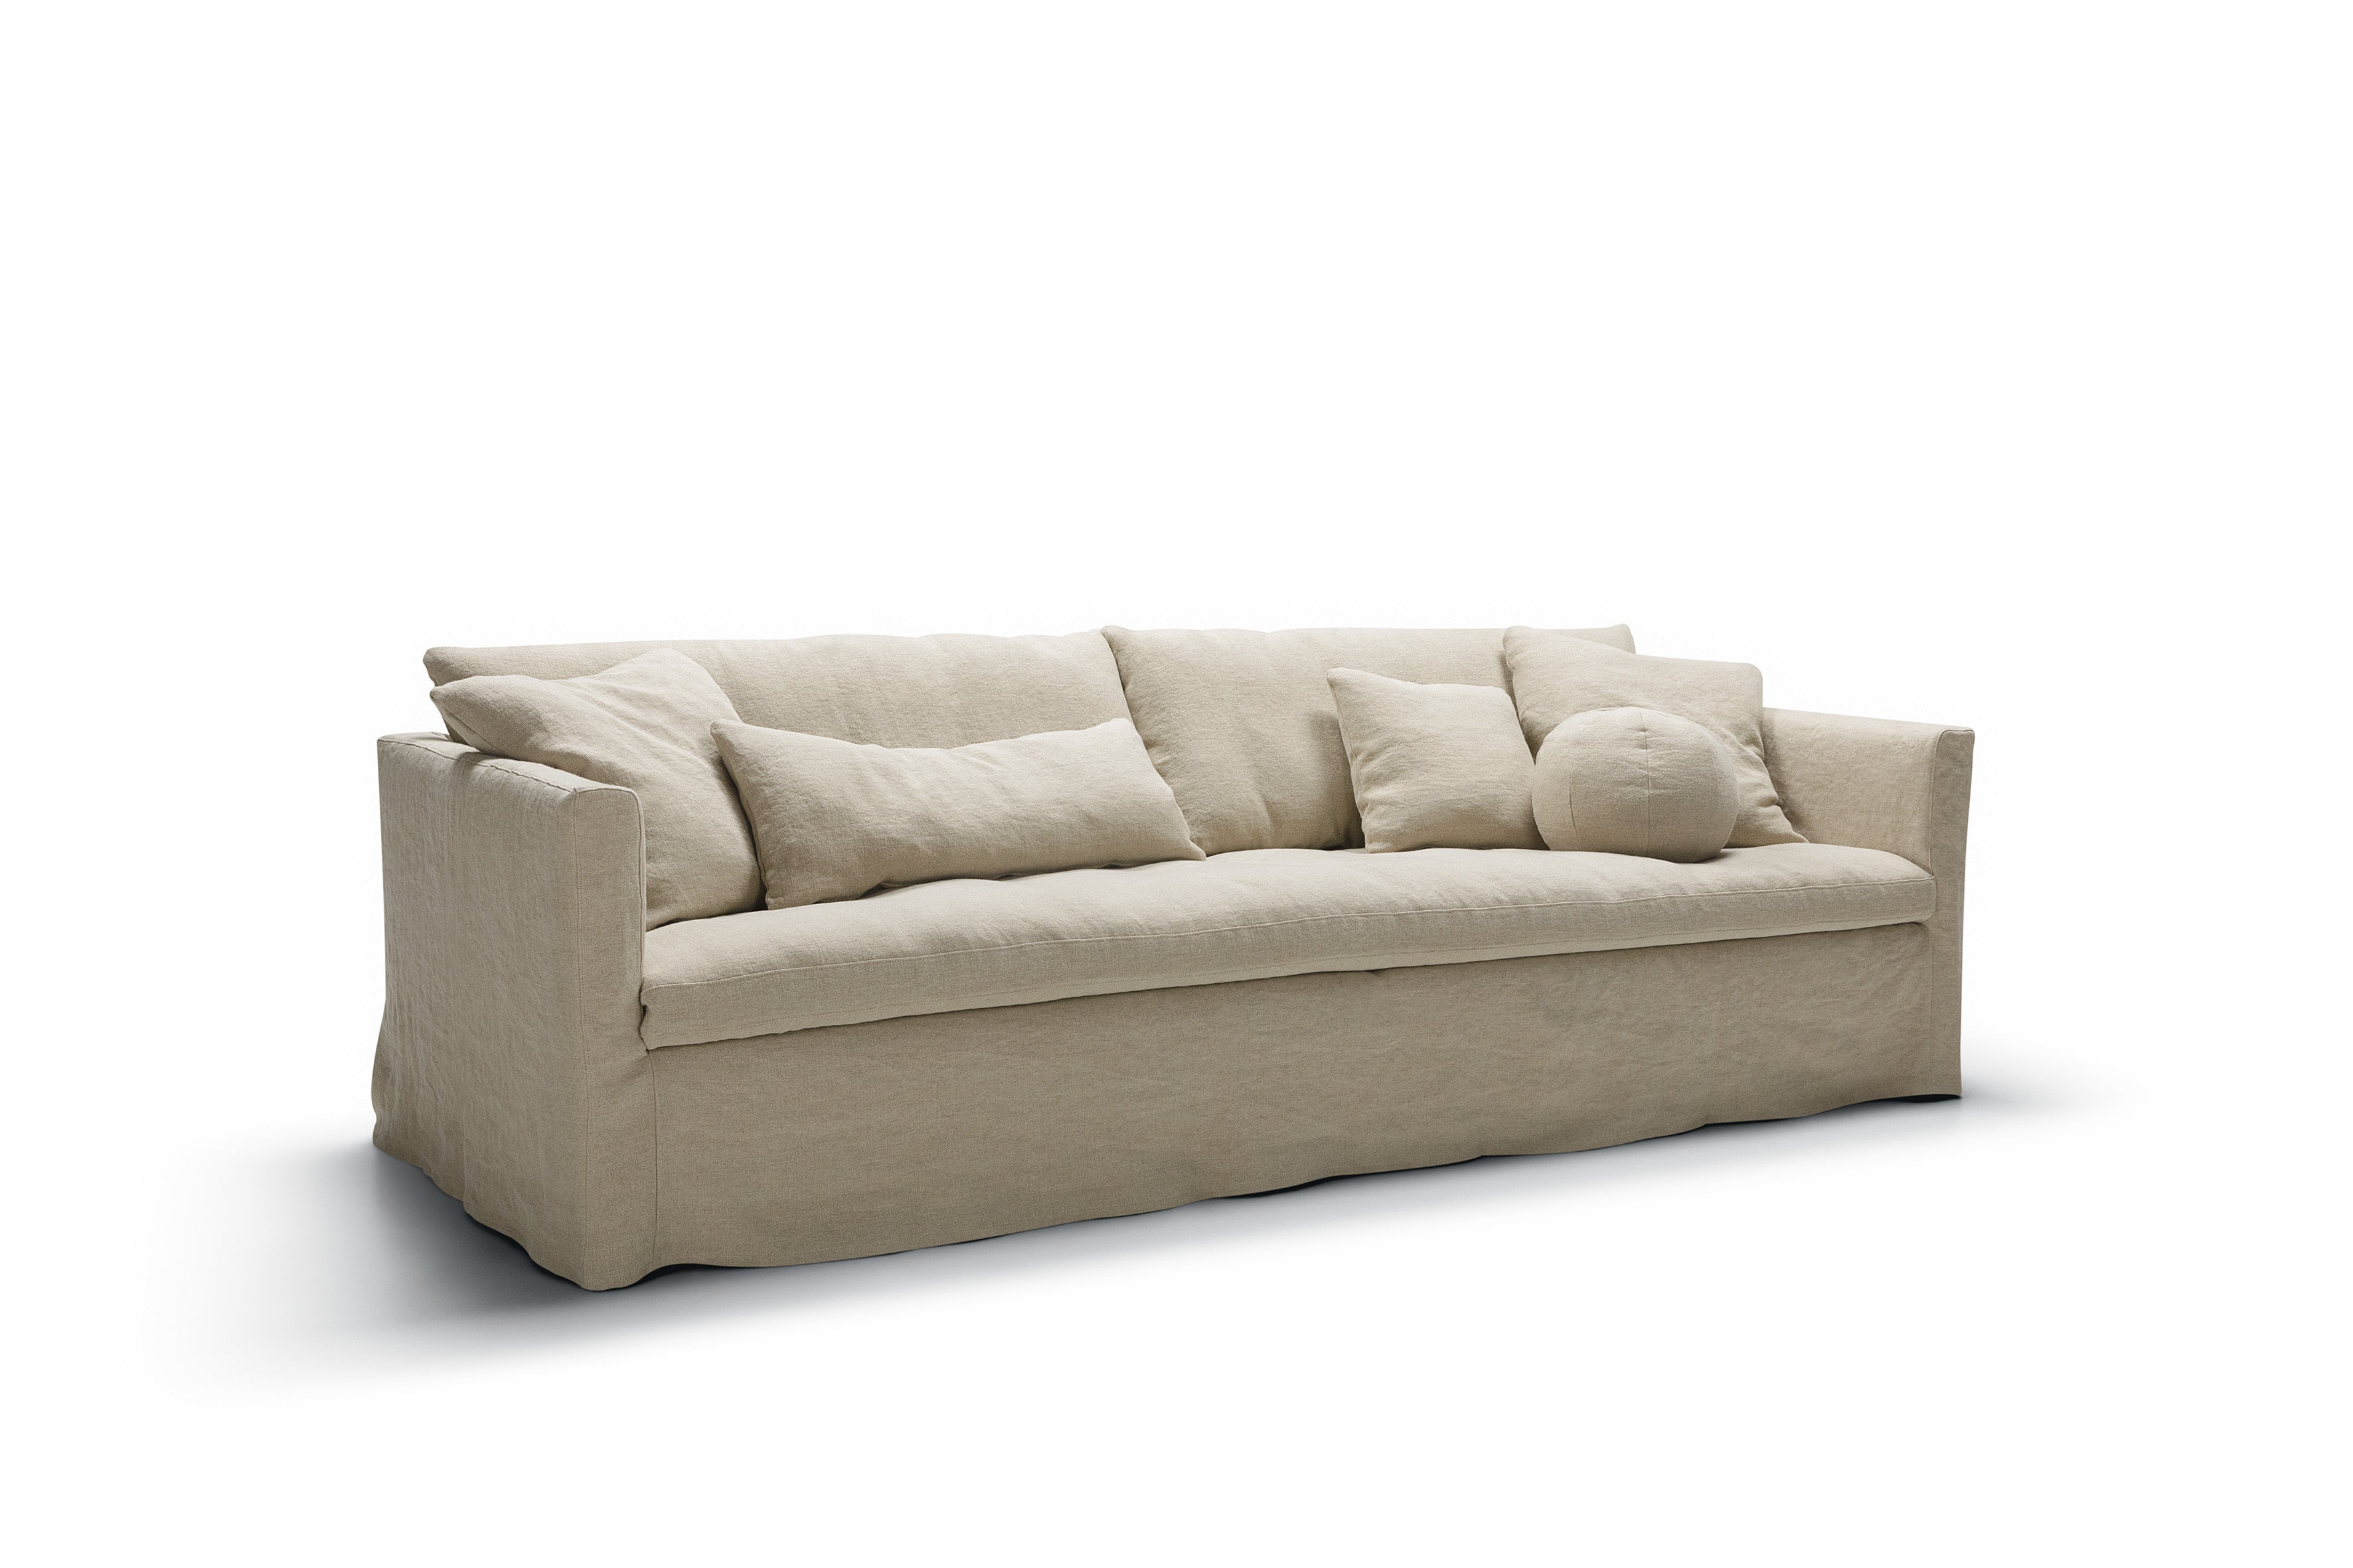 Mastrella Lana 3 Seater Sofa with Loose Cover